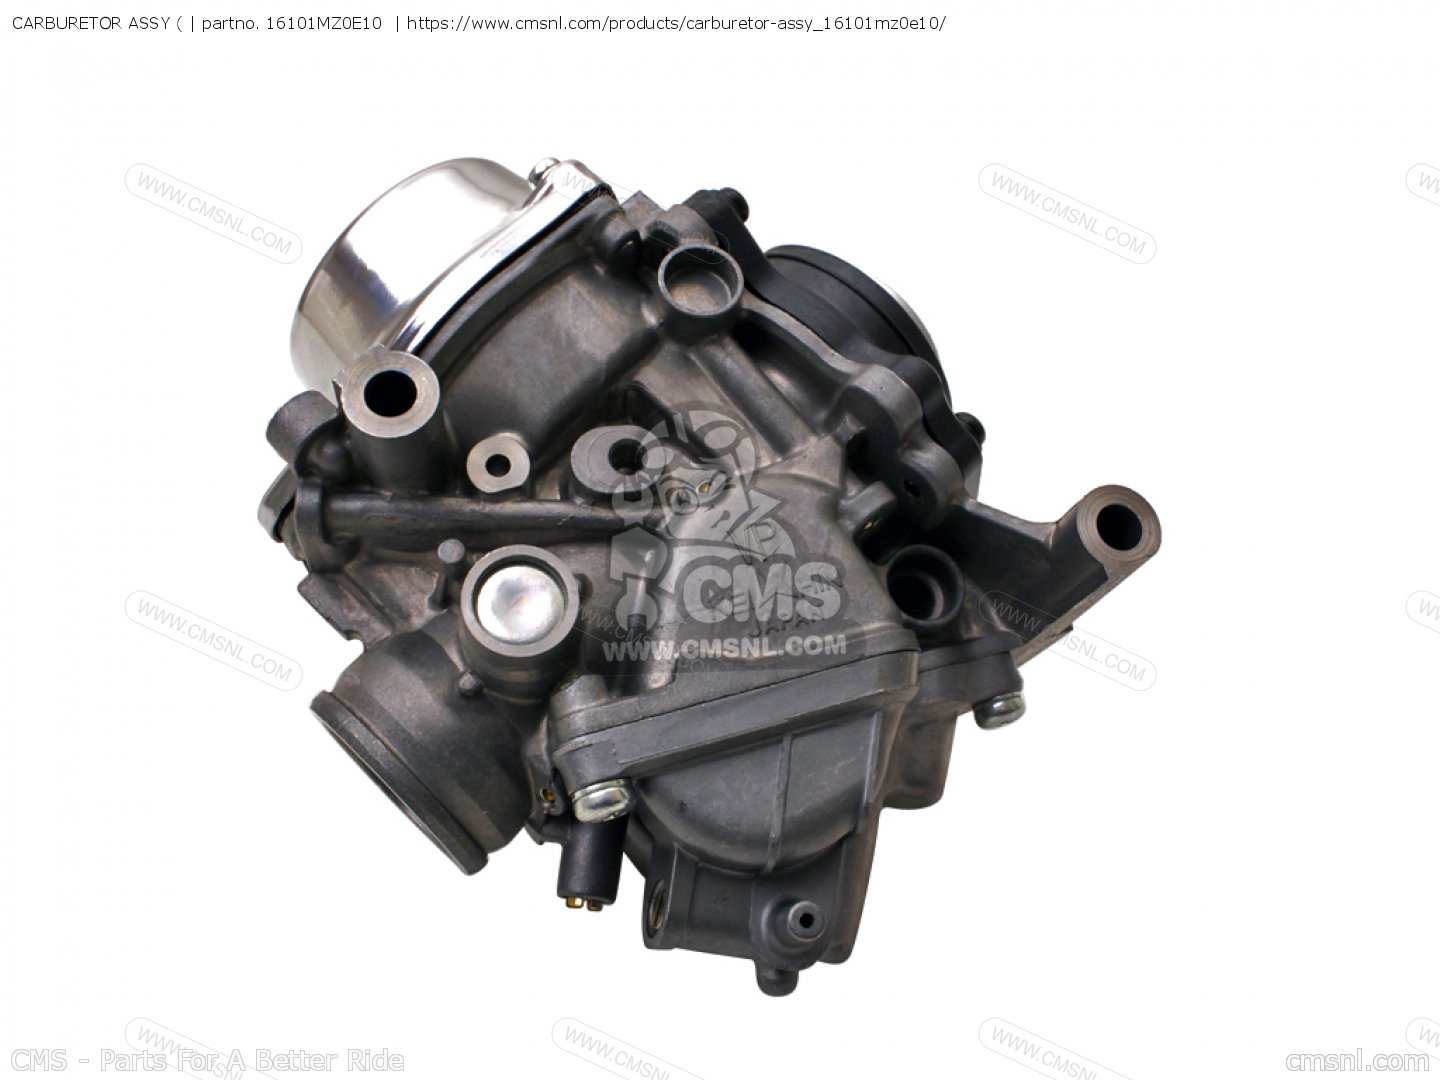 Carburetor Assy For Gl1500c Valkyrie 1999 X England Order At Cmsnl 8003